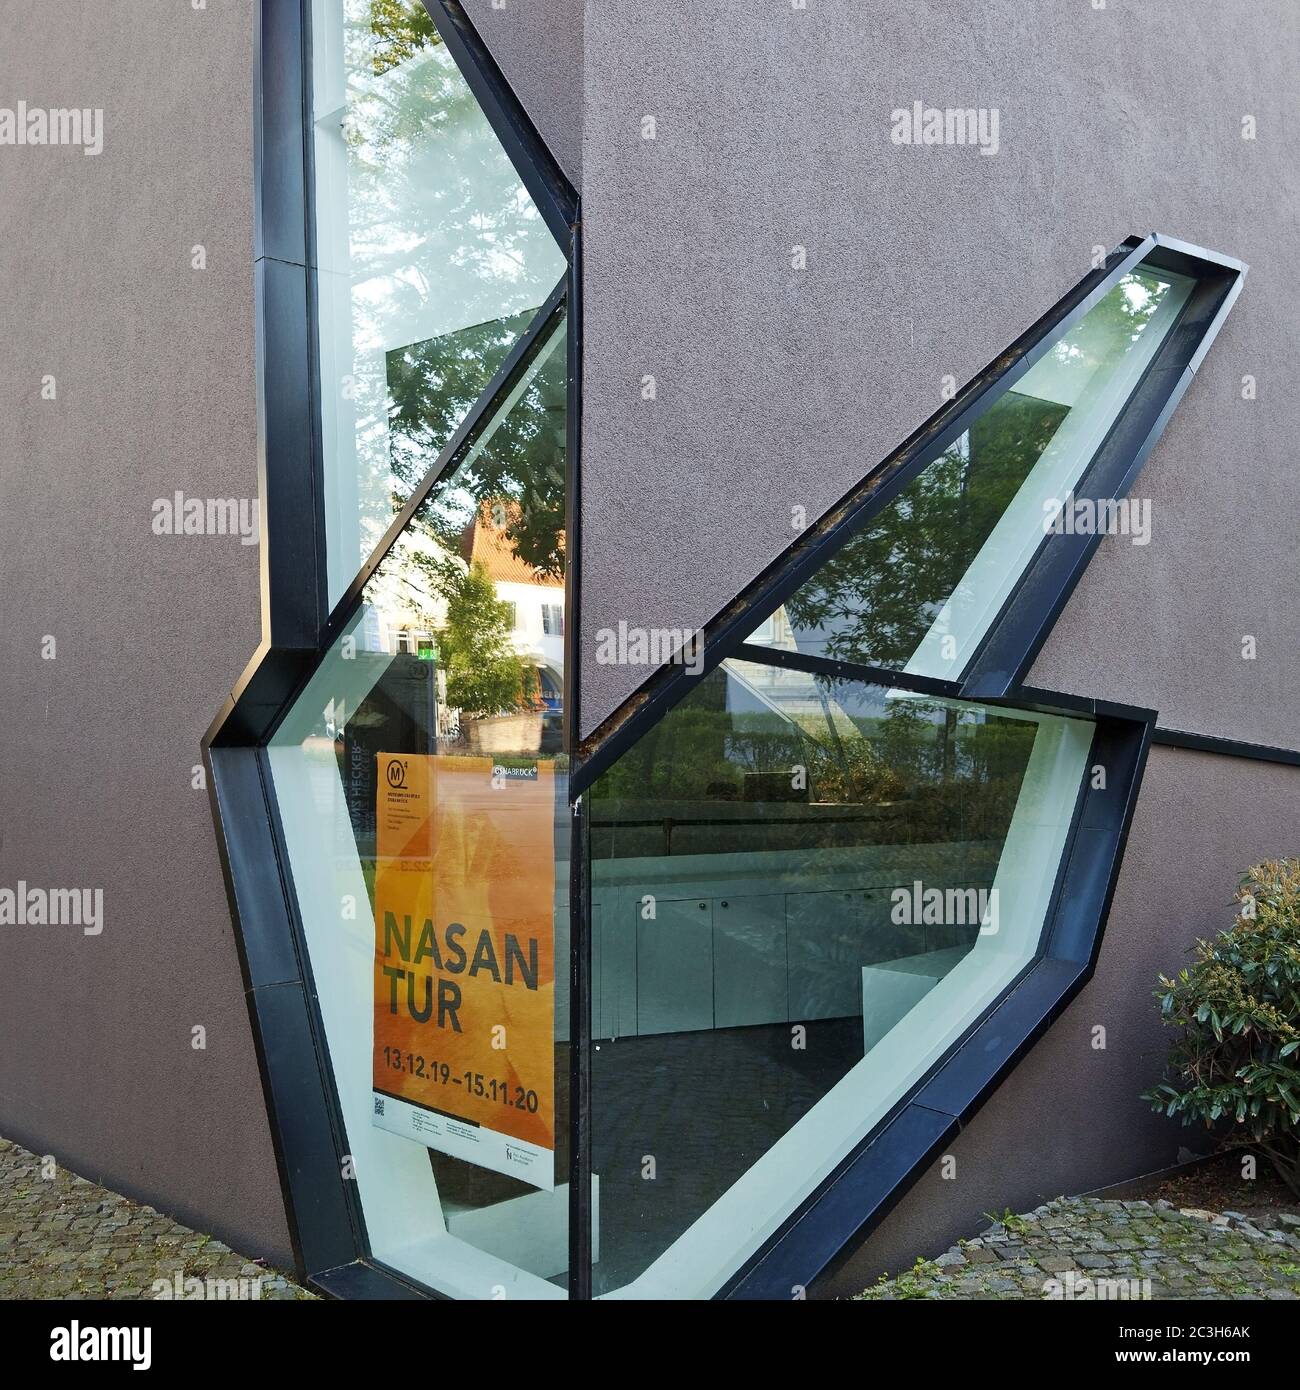 Felix Nussbaum House, architect Daniel Libeskind, Osnabrueck Museumsquartier, Osnabrueck, Germany Stock Photo